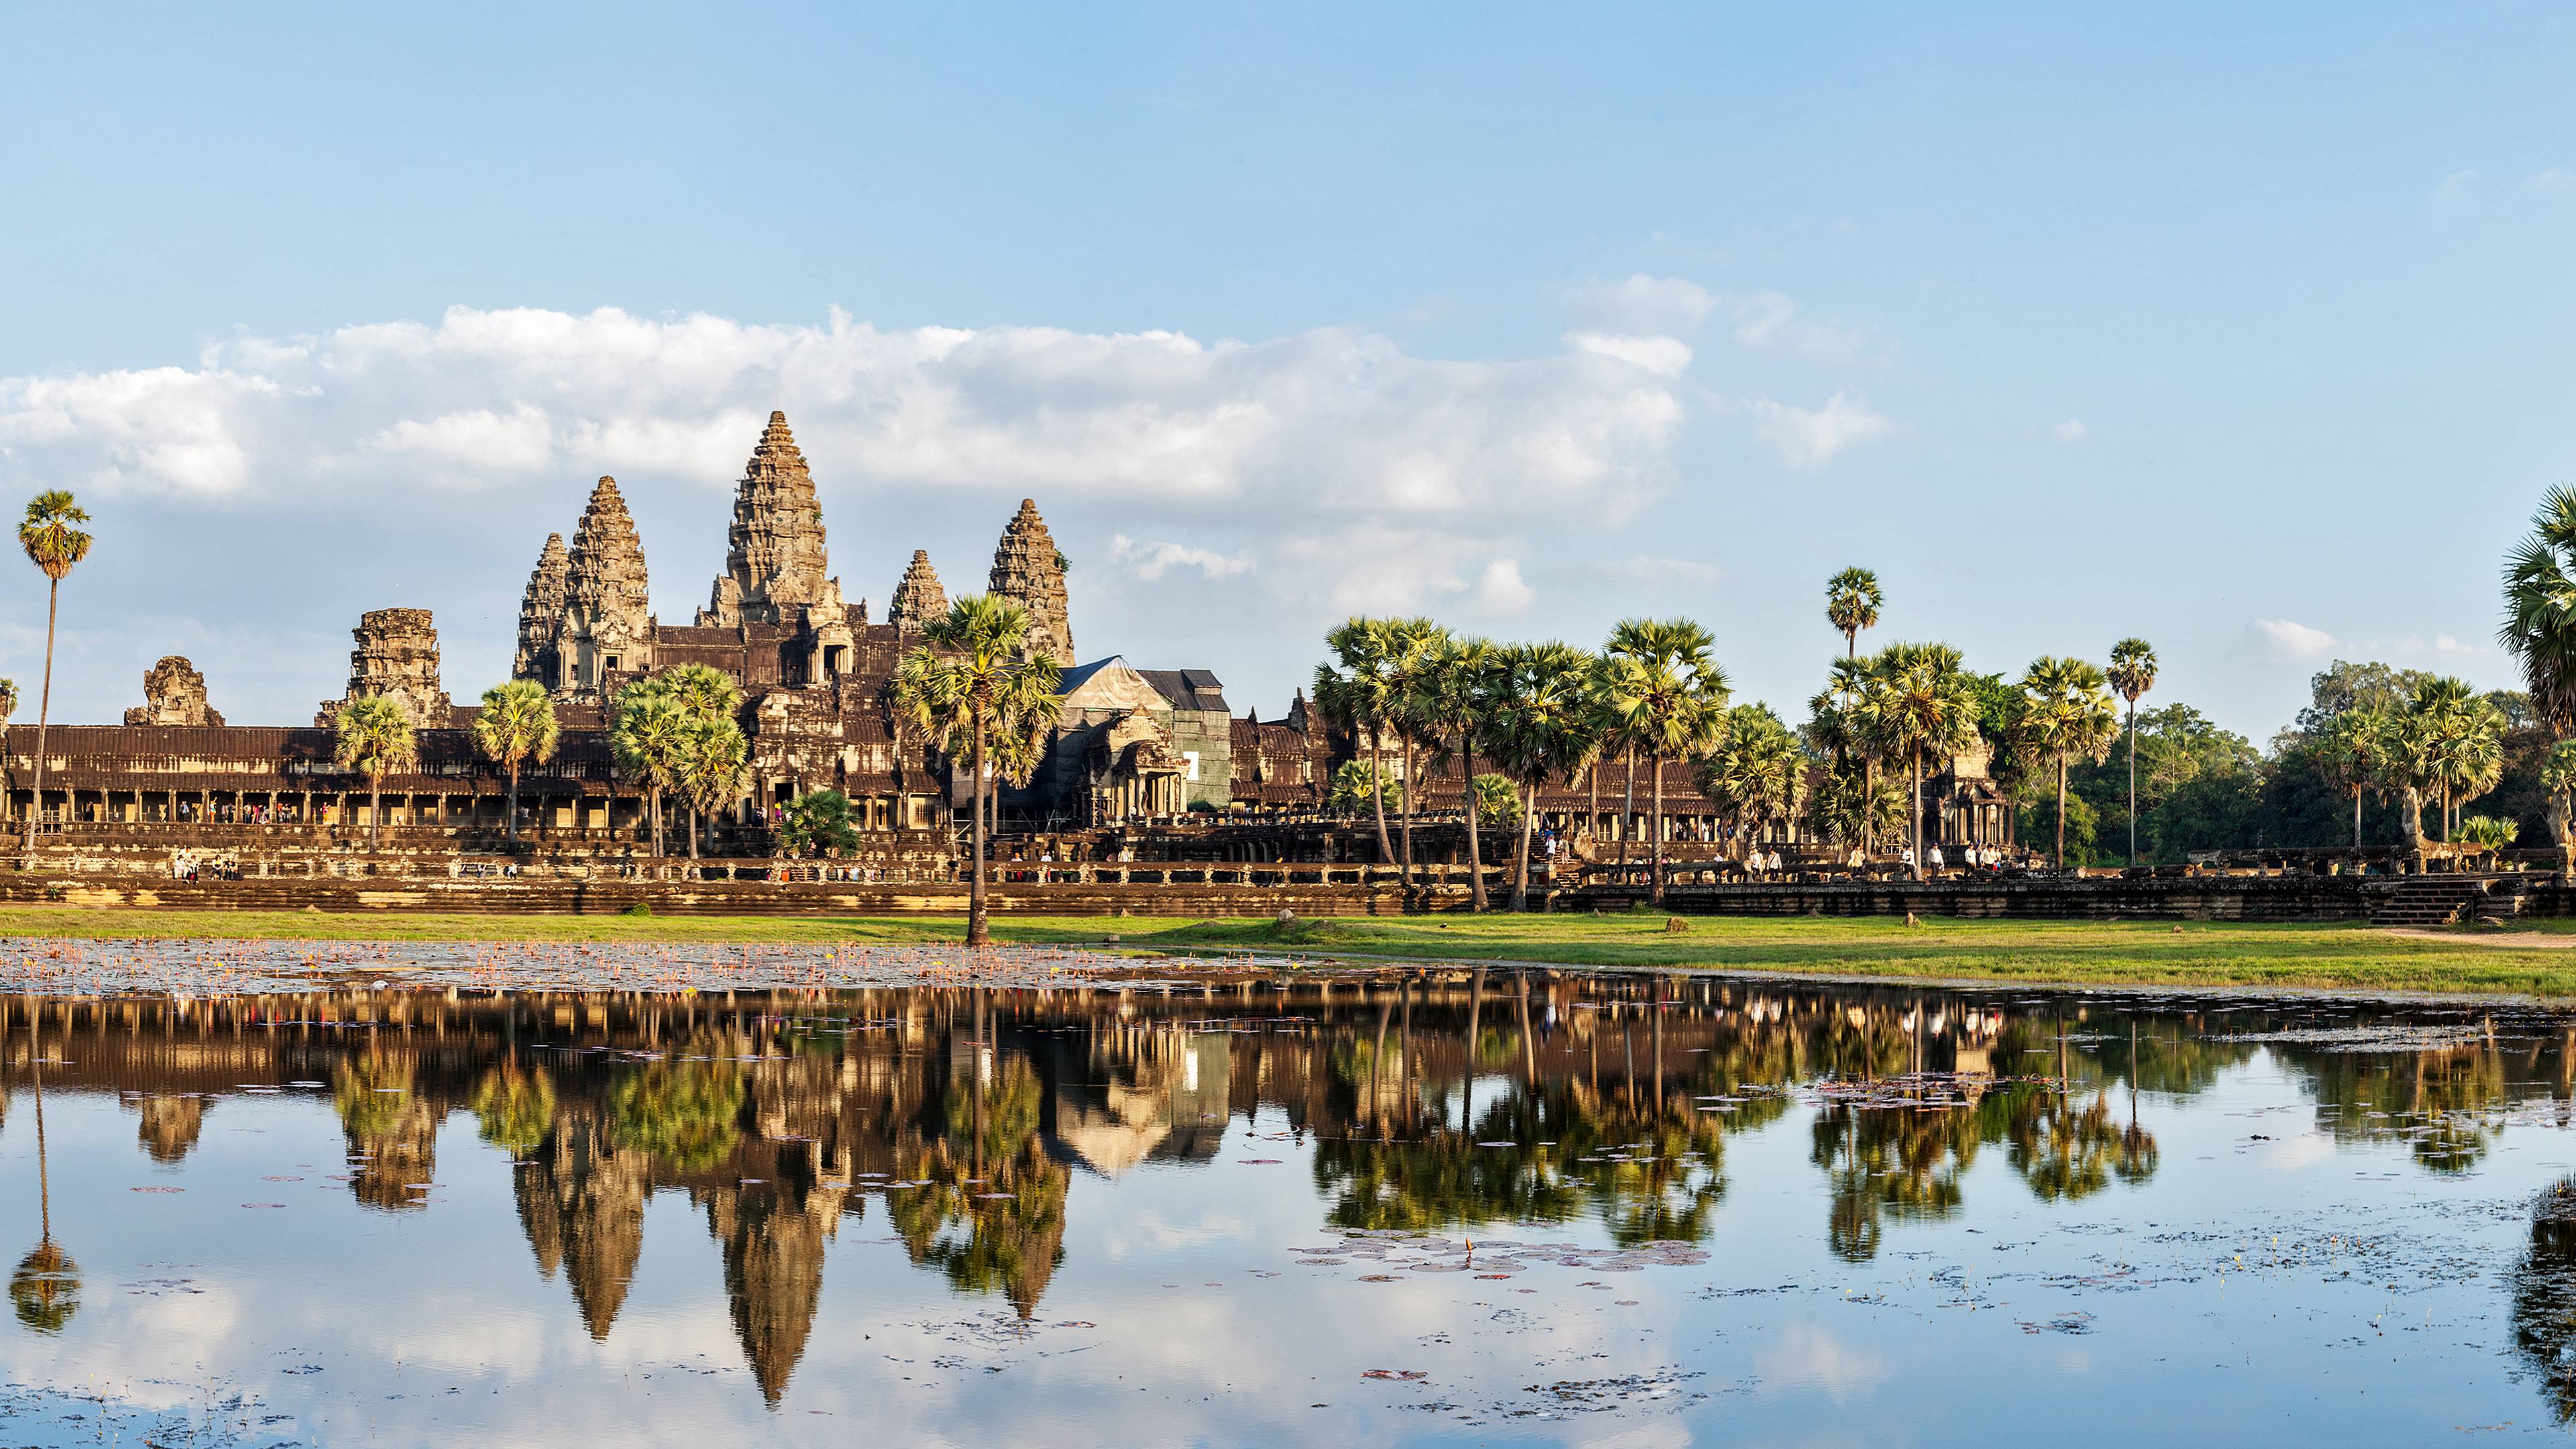 Le temple khmer d'Angkor Wat